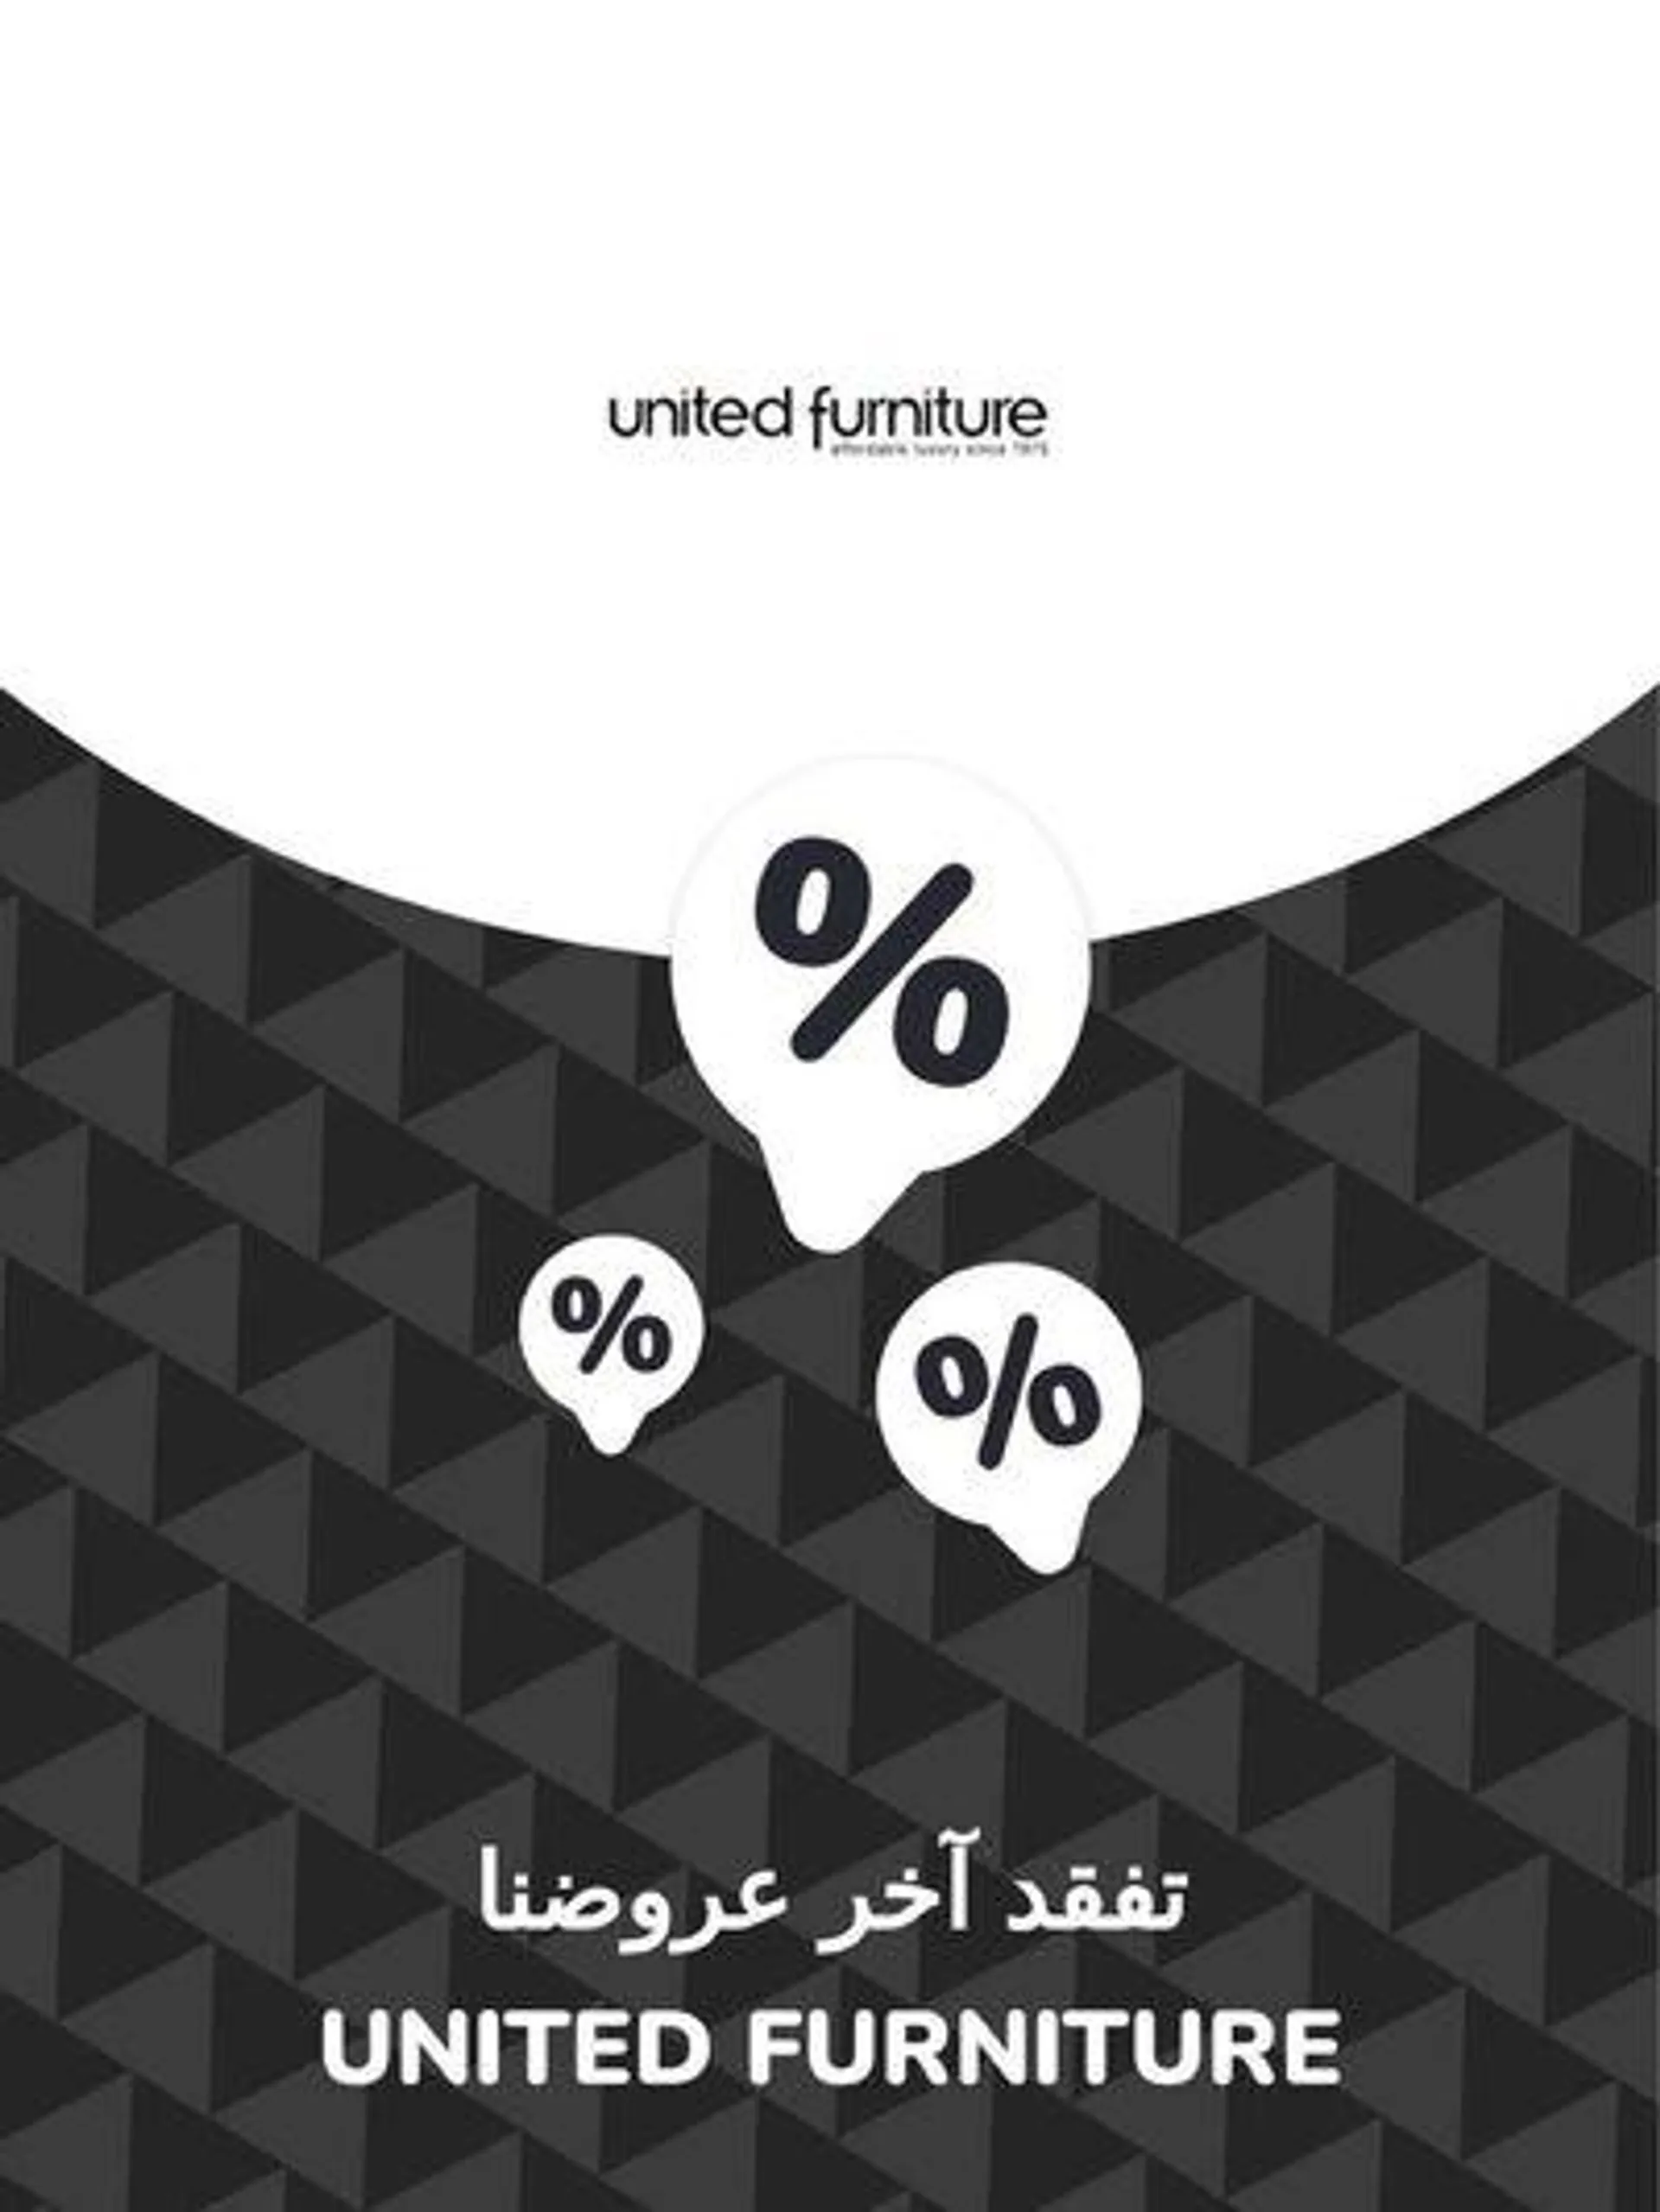 Offers United Furniture - 1